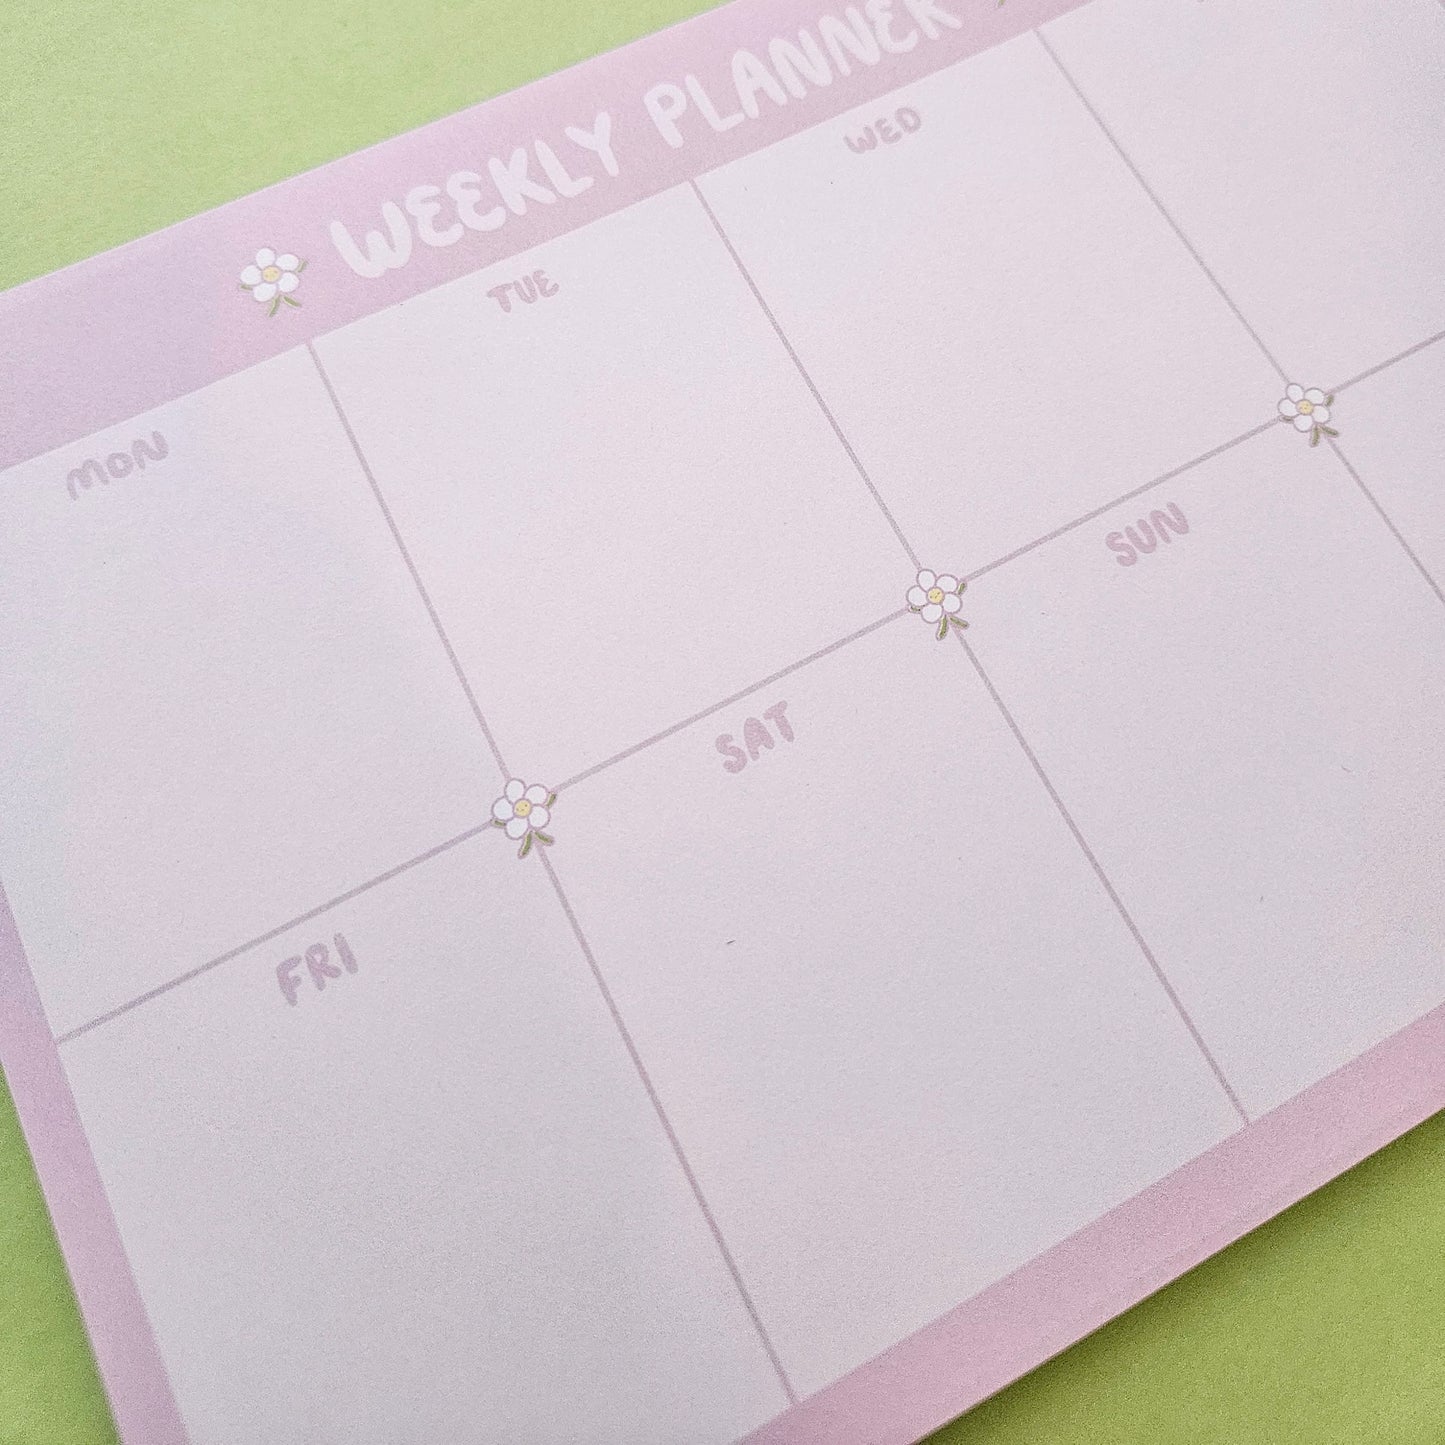 Pink Weekly Planner